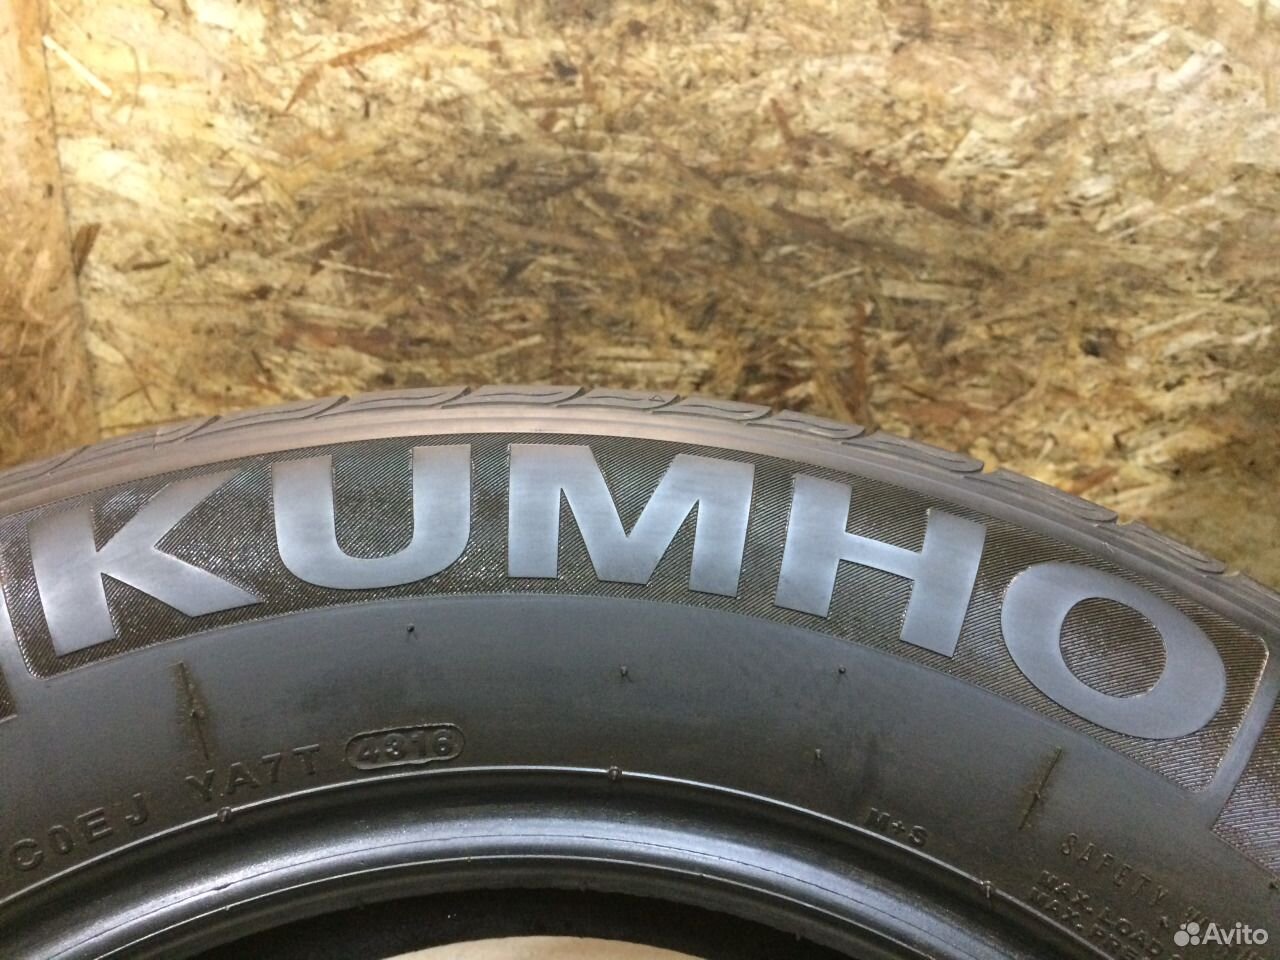 Kumho PORTRAN cx11. Wp52 Kumho. Kumho шины Страна производитель. Кумхо шины бу. Кумхо производитель отзывы